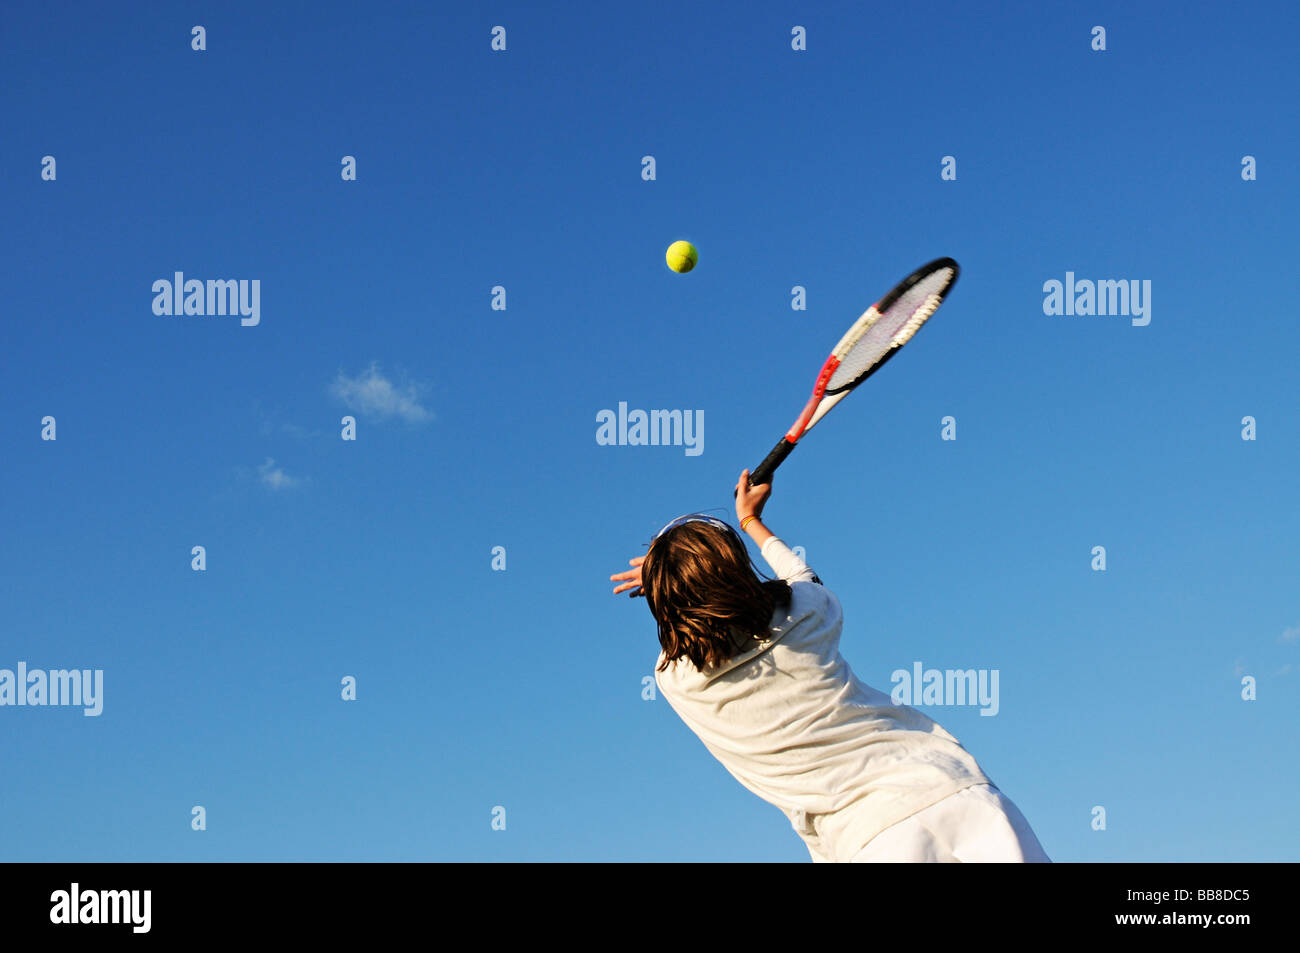 action shot of girl hitting tennis ball Stock Photo